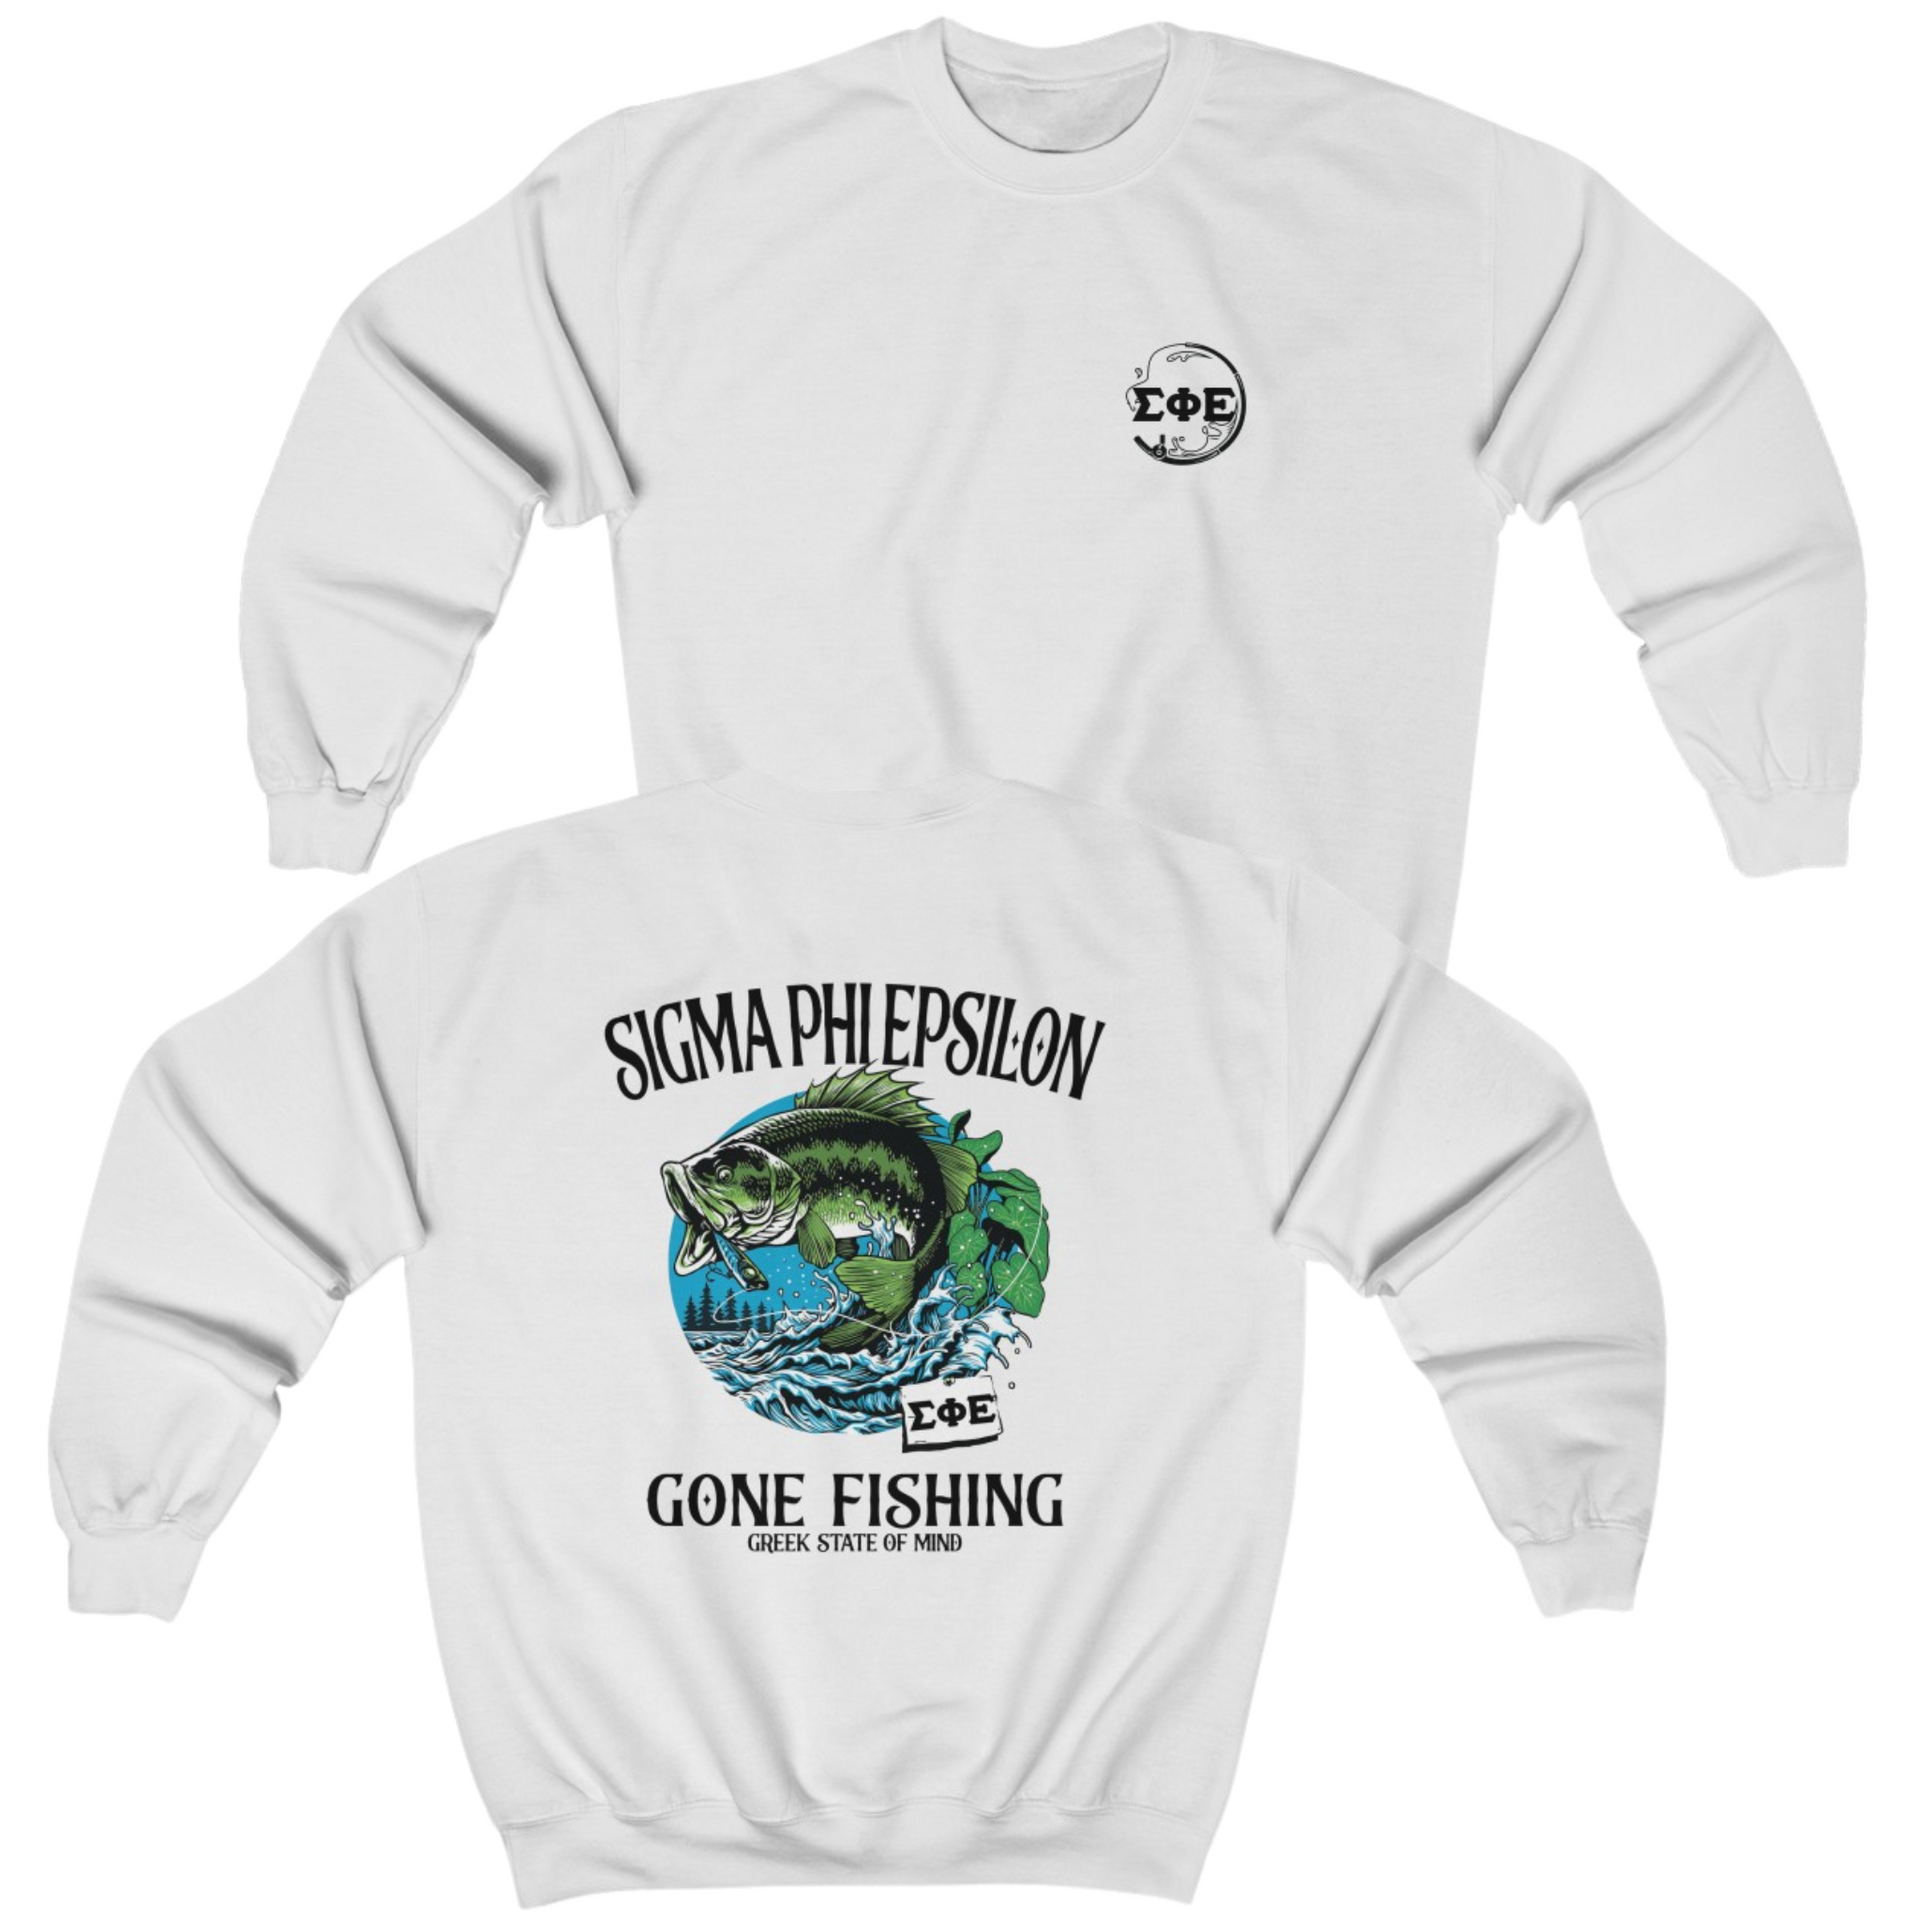 White Sigma Phi Epsilon Graphic Crewneck Sweatshirt | Gone Fishing | SigEp Clothing - Campus Apparel 